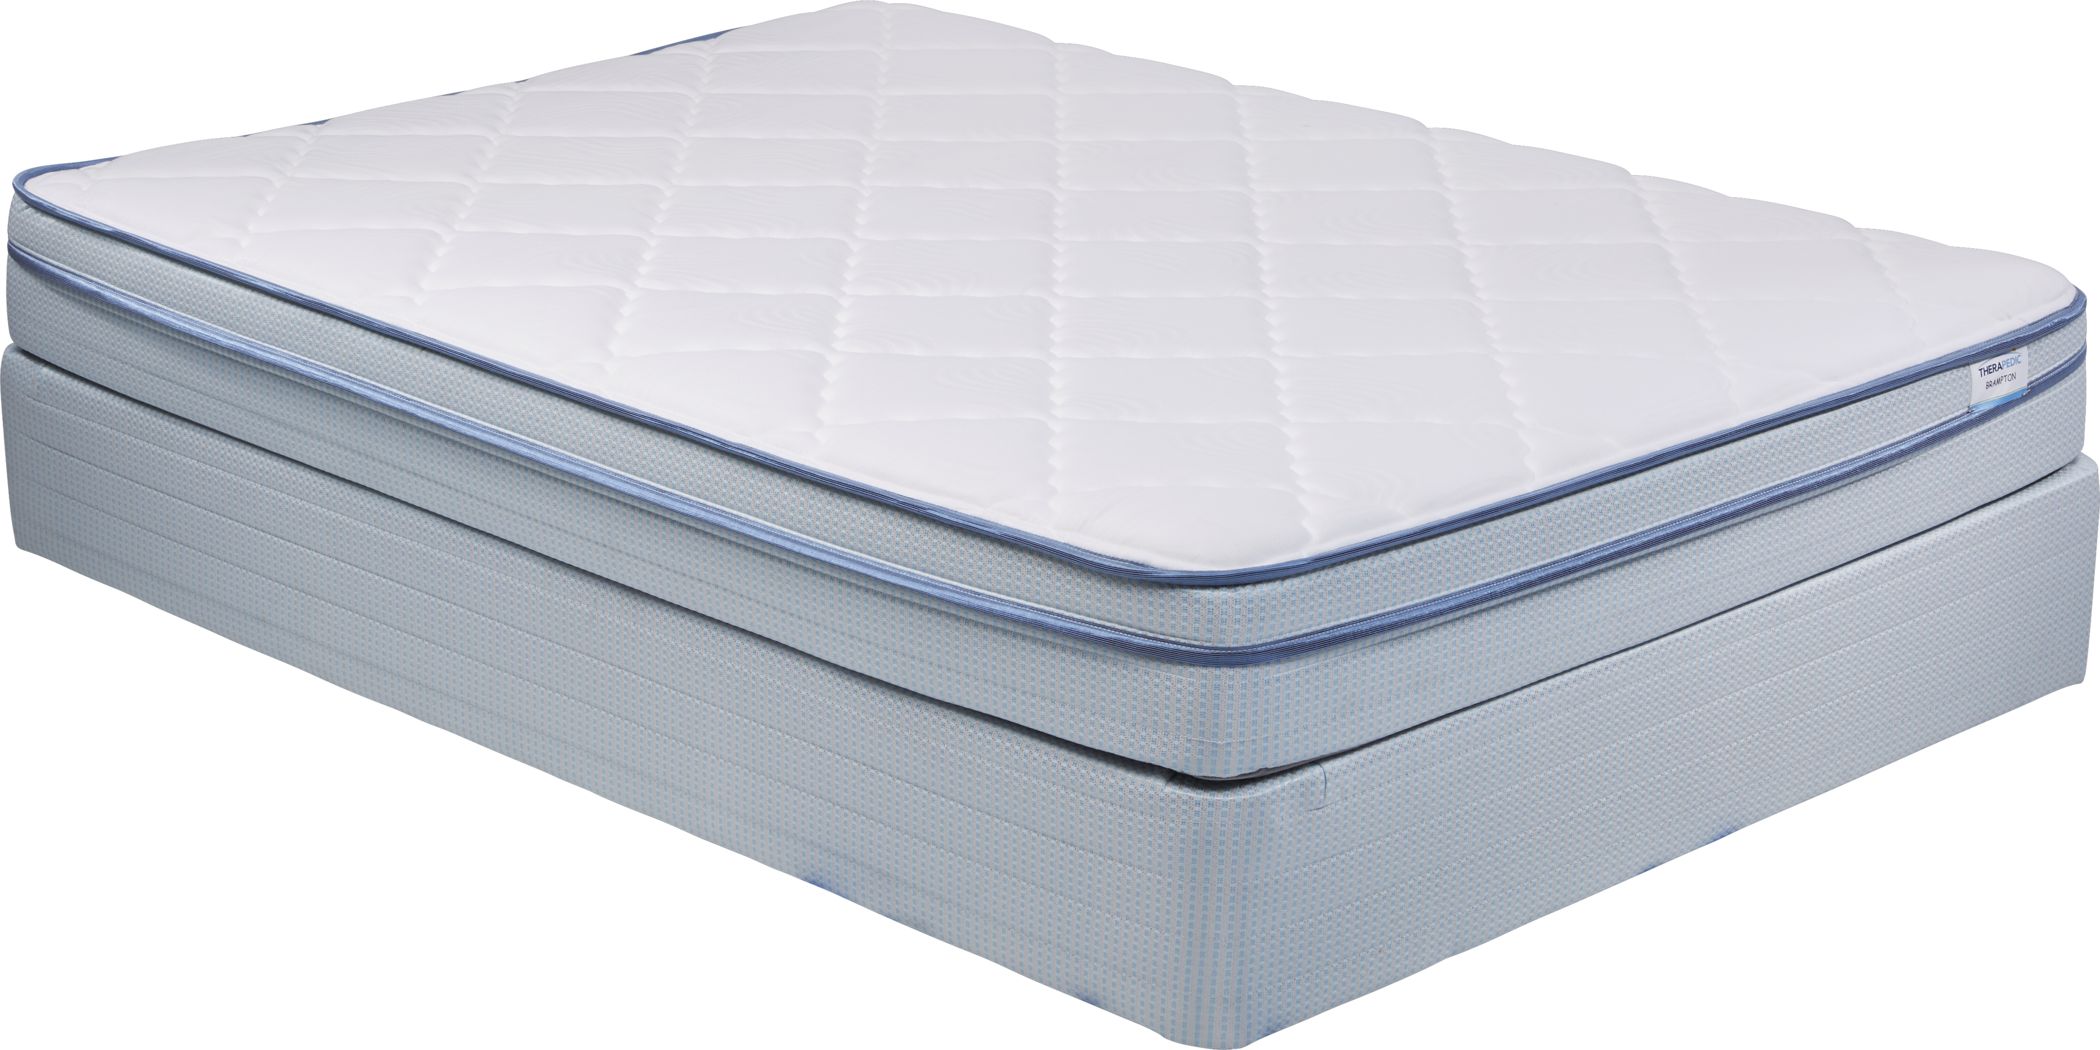 mattress on sale in brampton